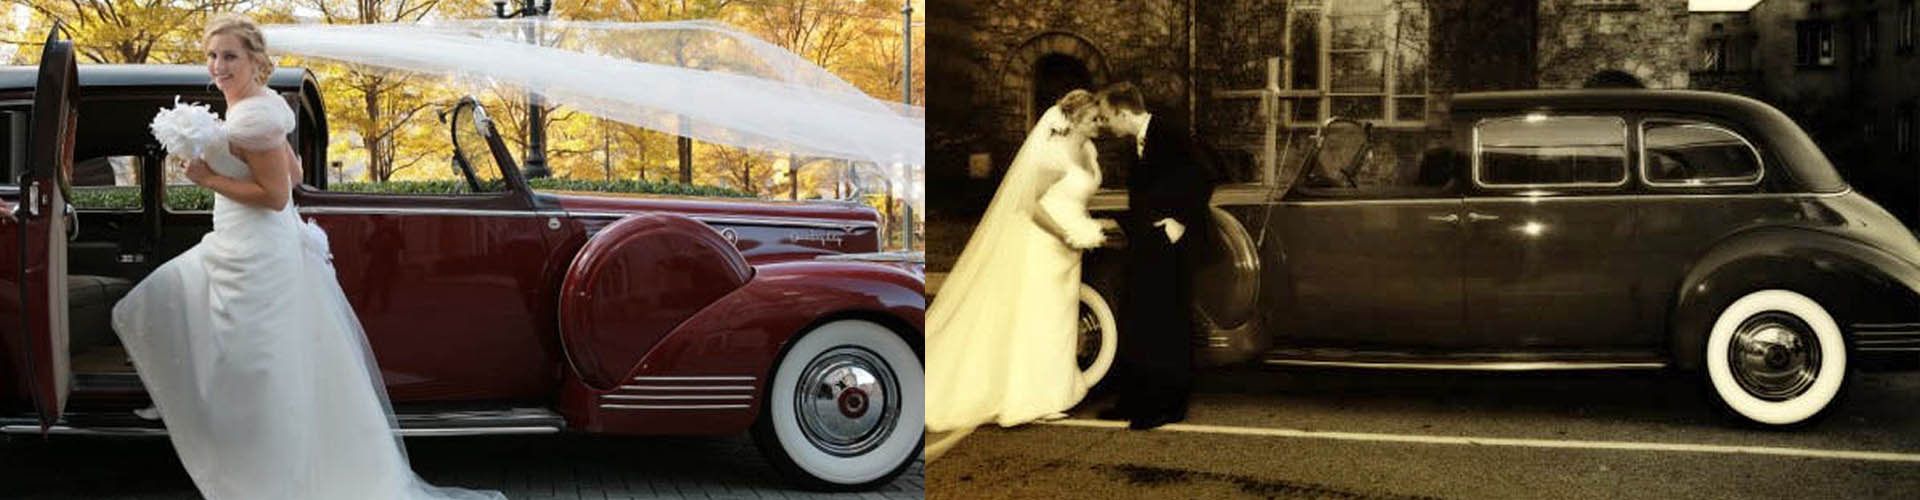 Classic Car Wedding Transportation 1942 Red Packard Luxury